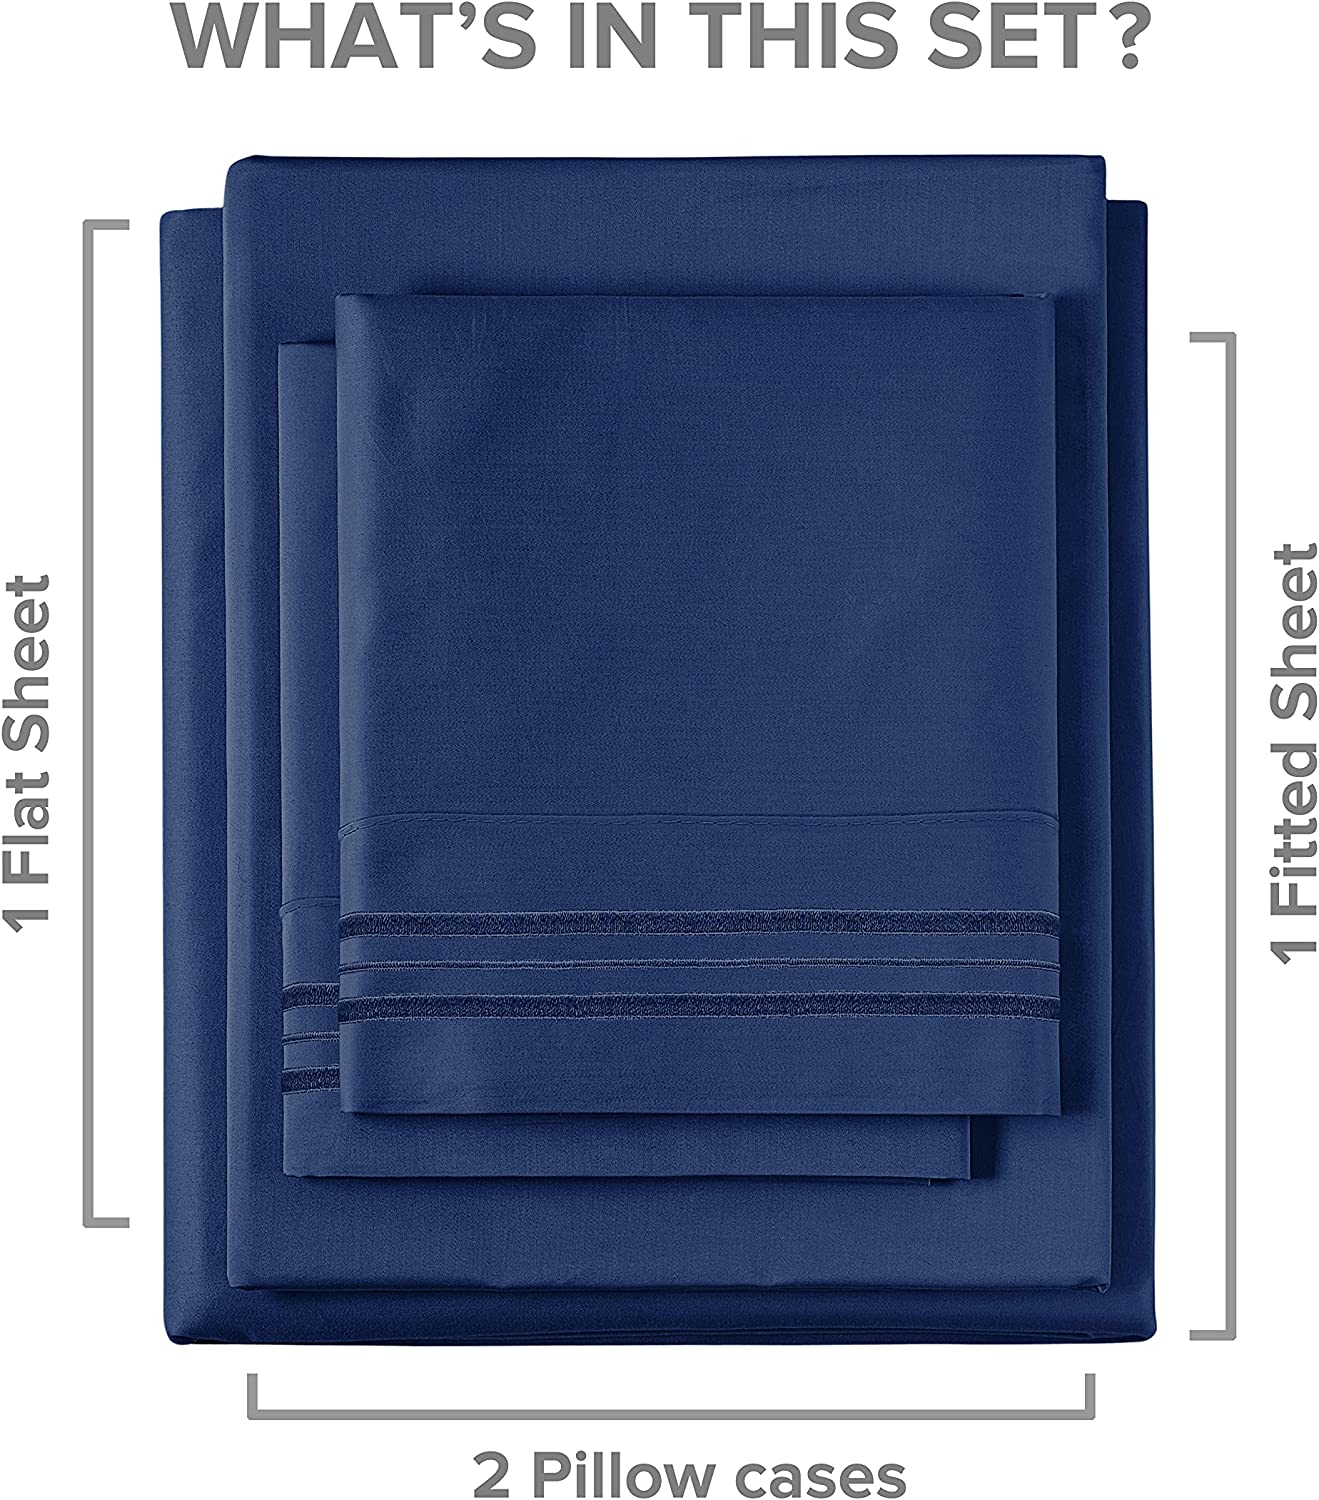 tes Cotton 400 Thread Count 4 Piece Deep Pocket Sheet Set - Navy Blue